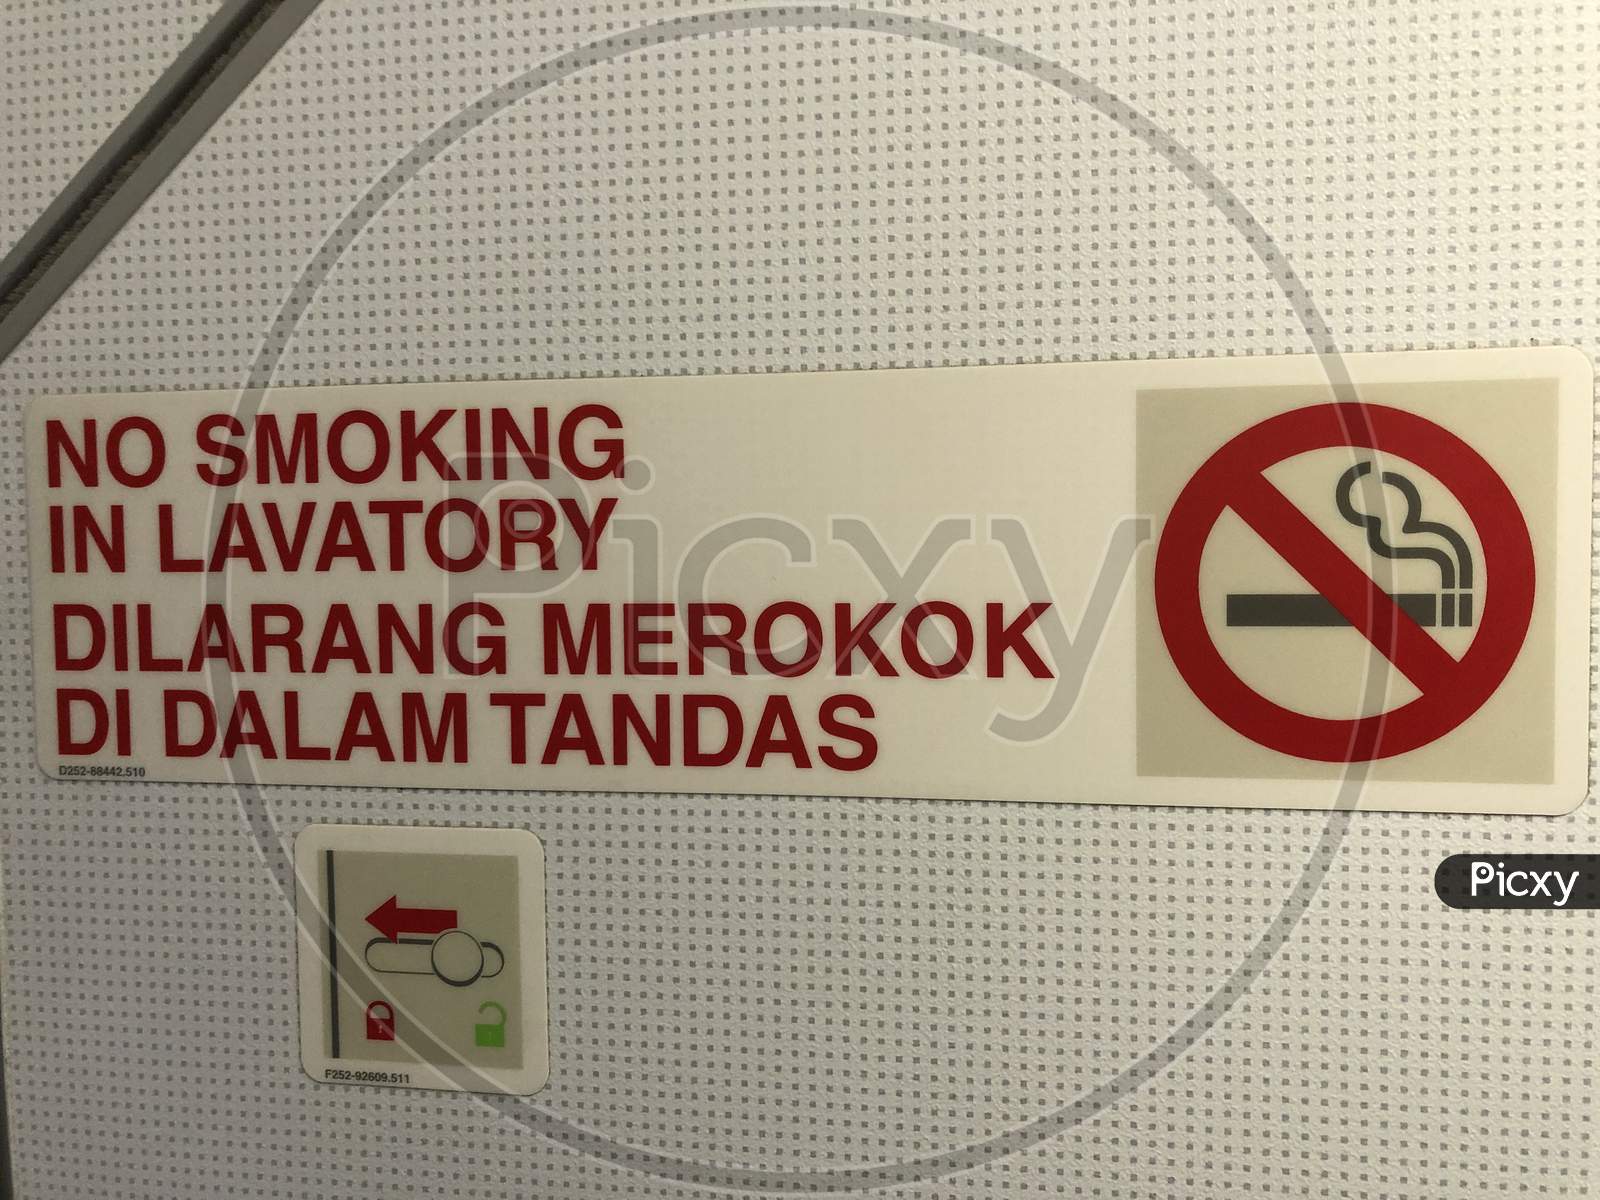 No Smoking Board inside a washroom in flight.